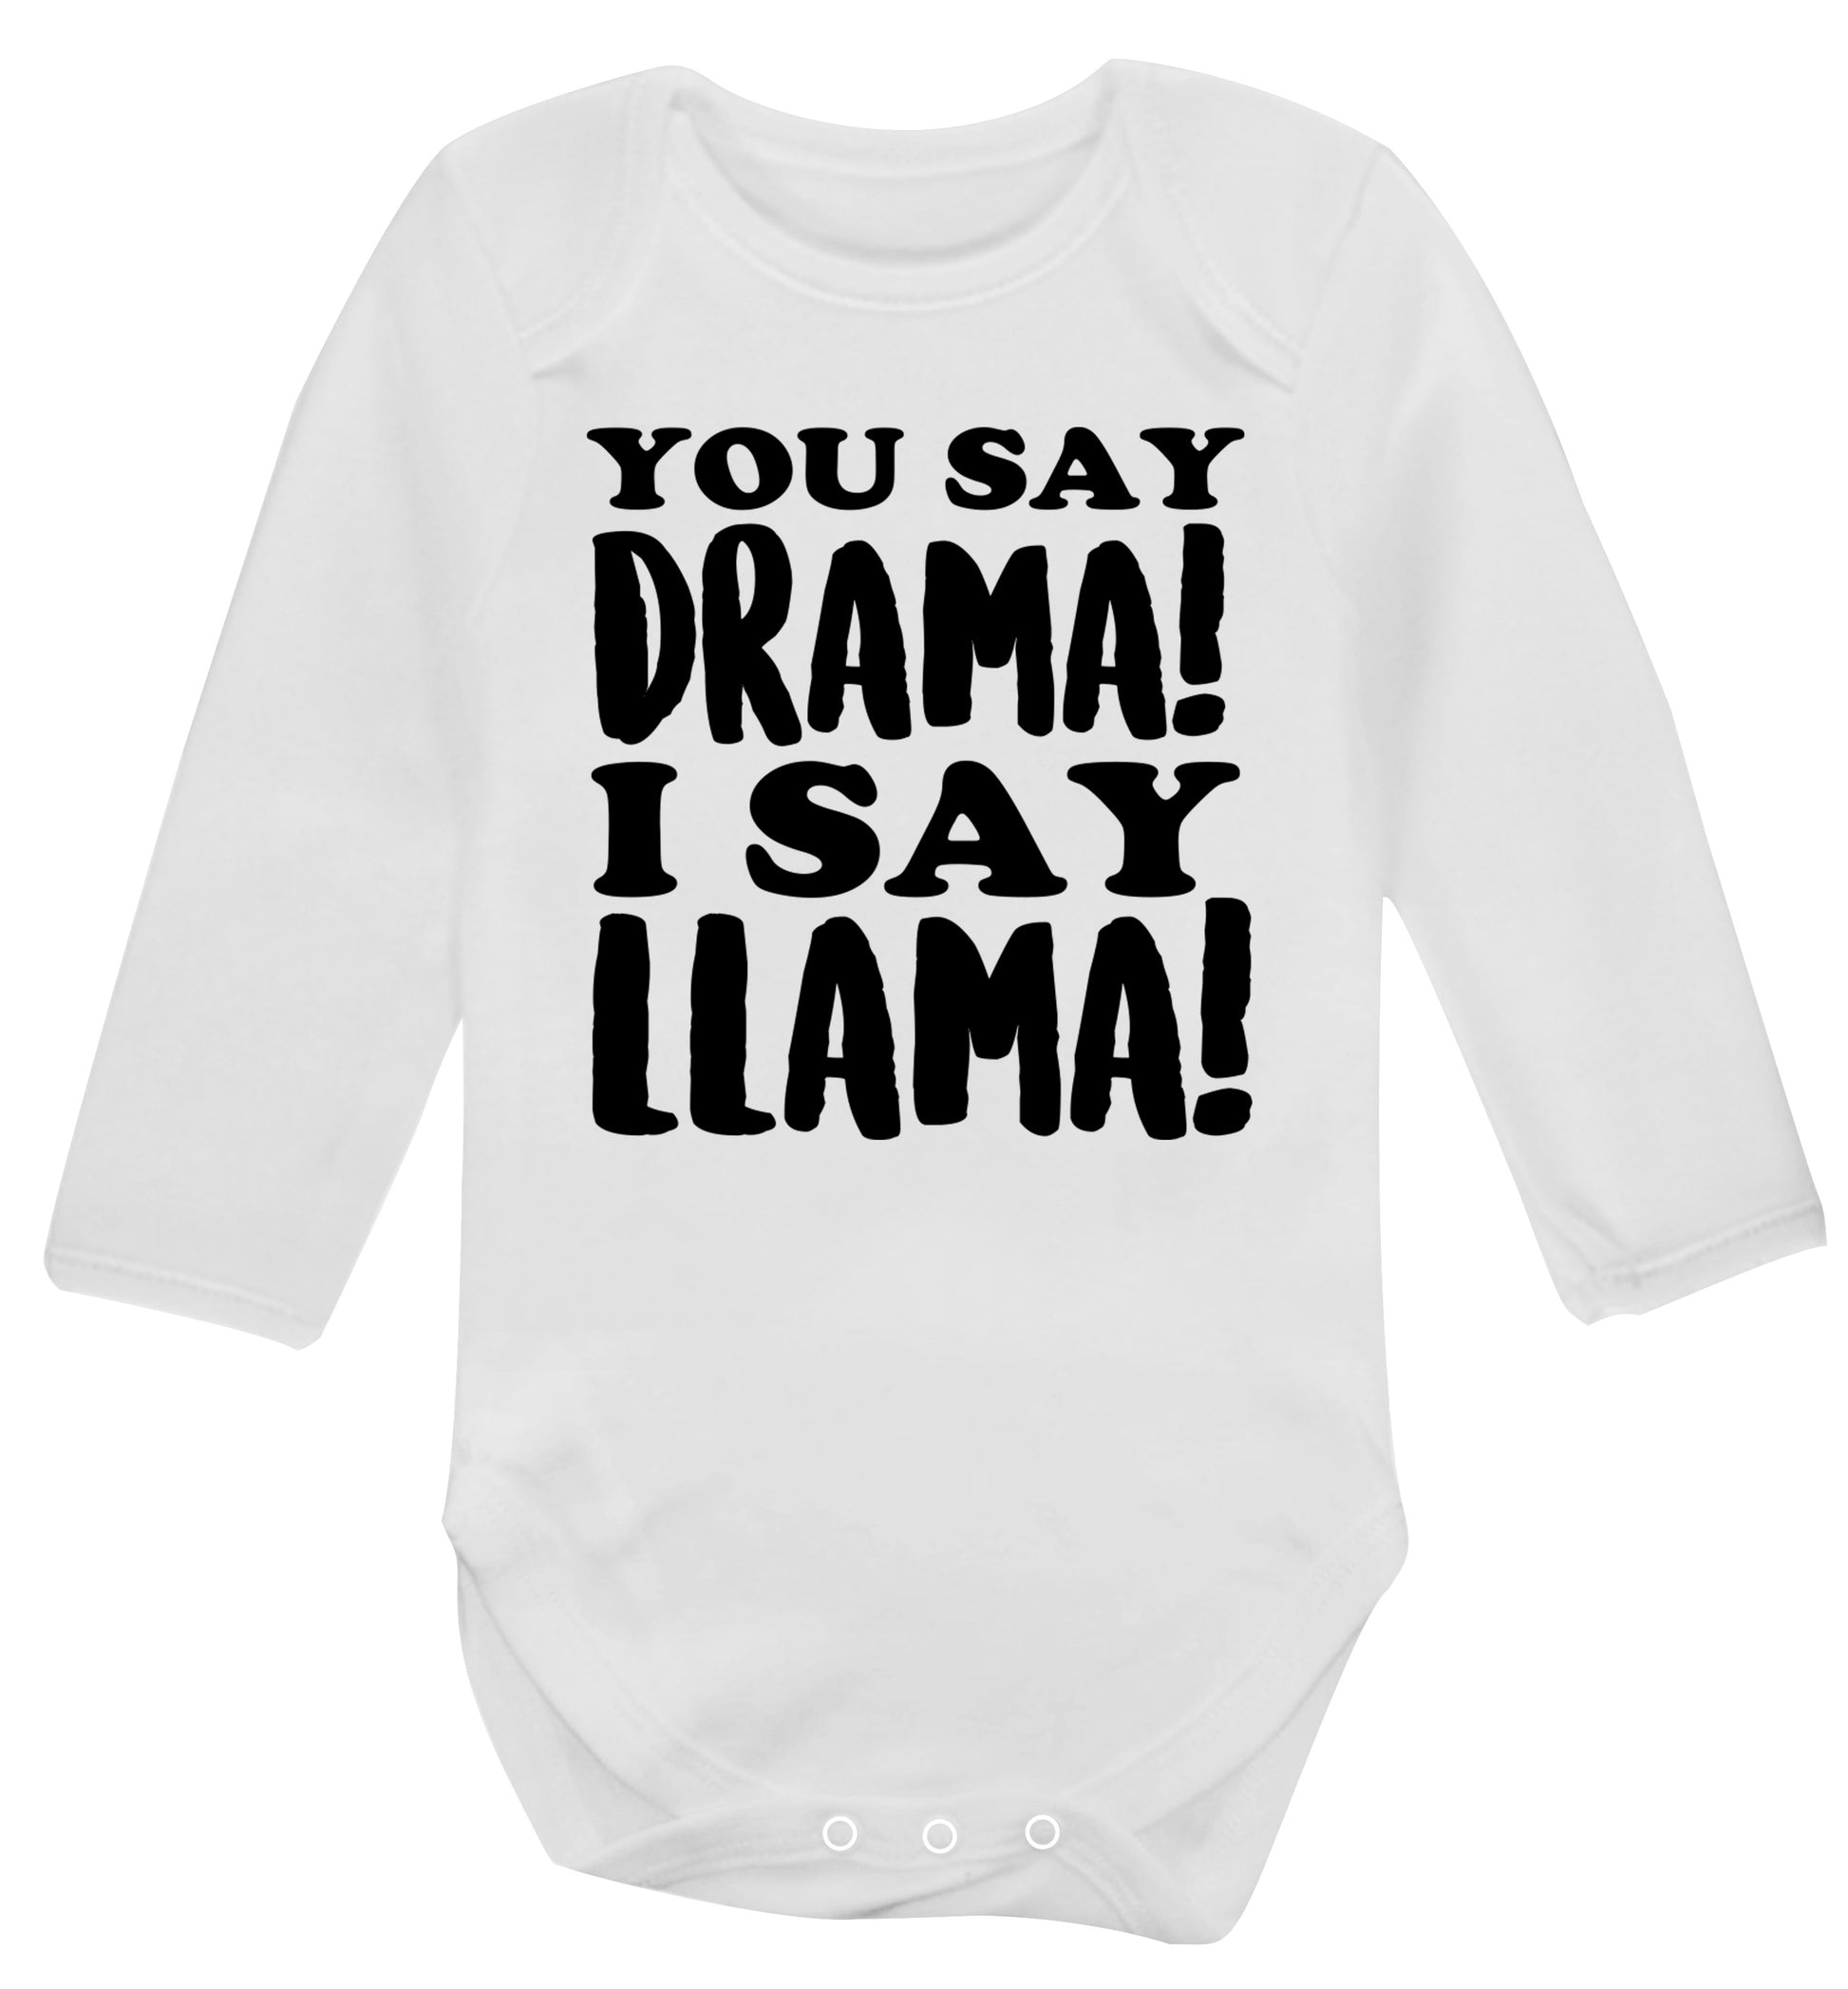 You say drama I say llama! Baby Vest long sleeved white 6-12 months